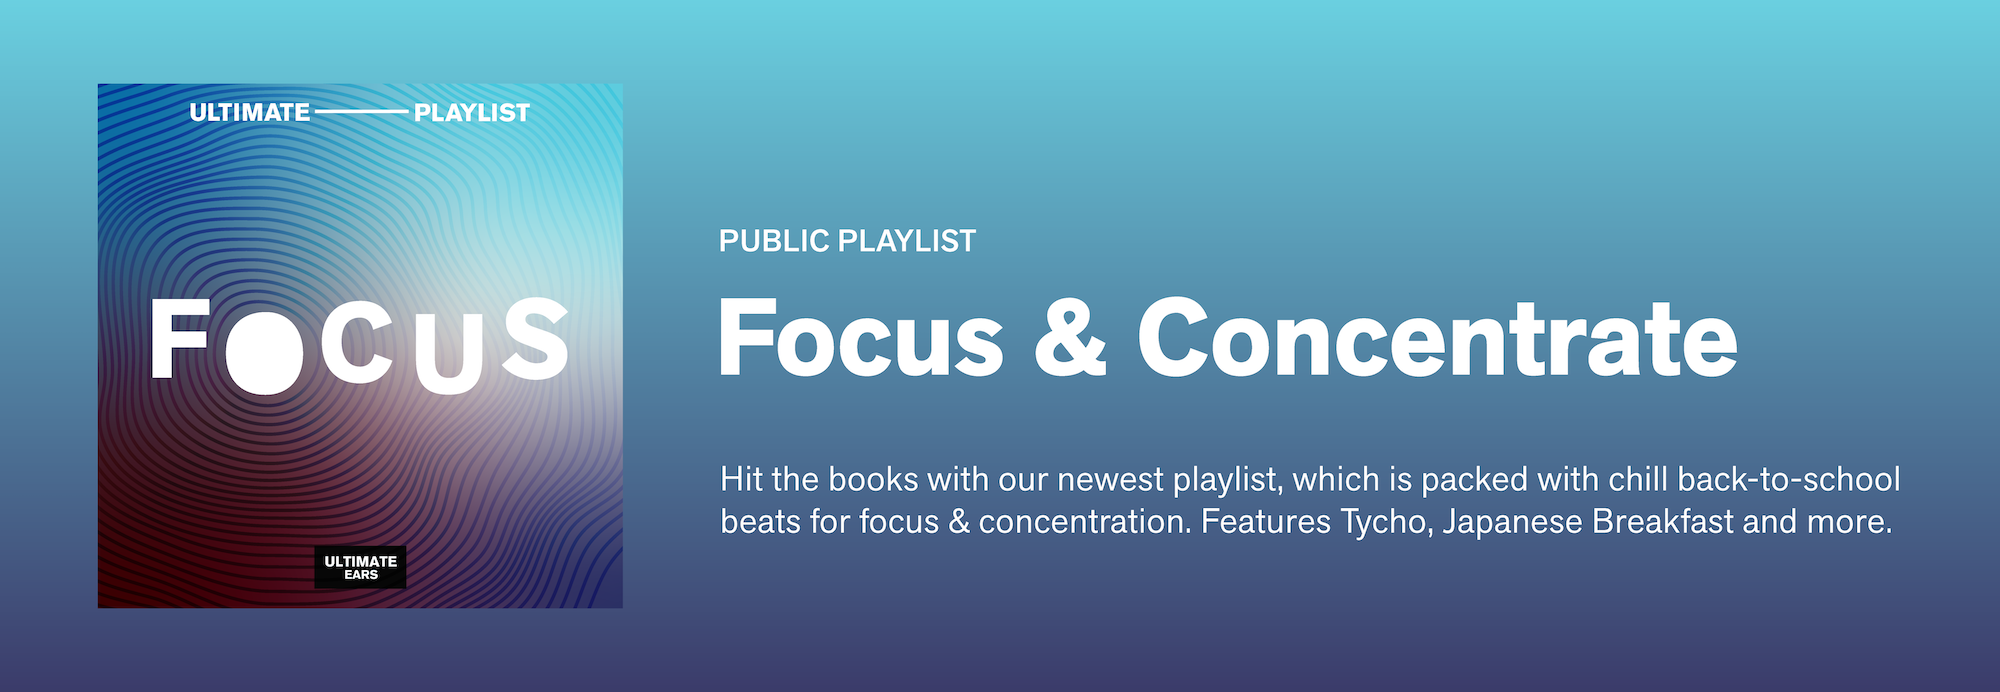 Playlist: Focus & Concentrate